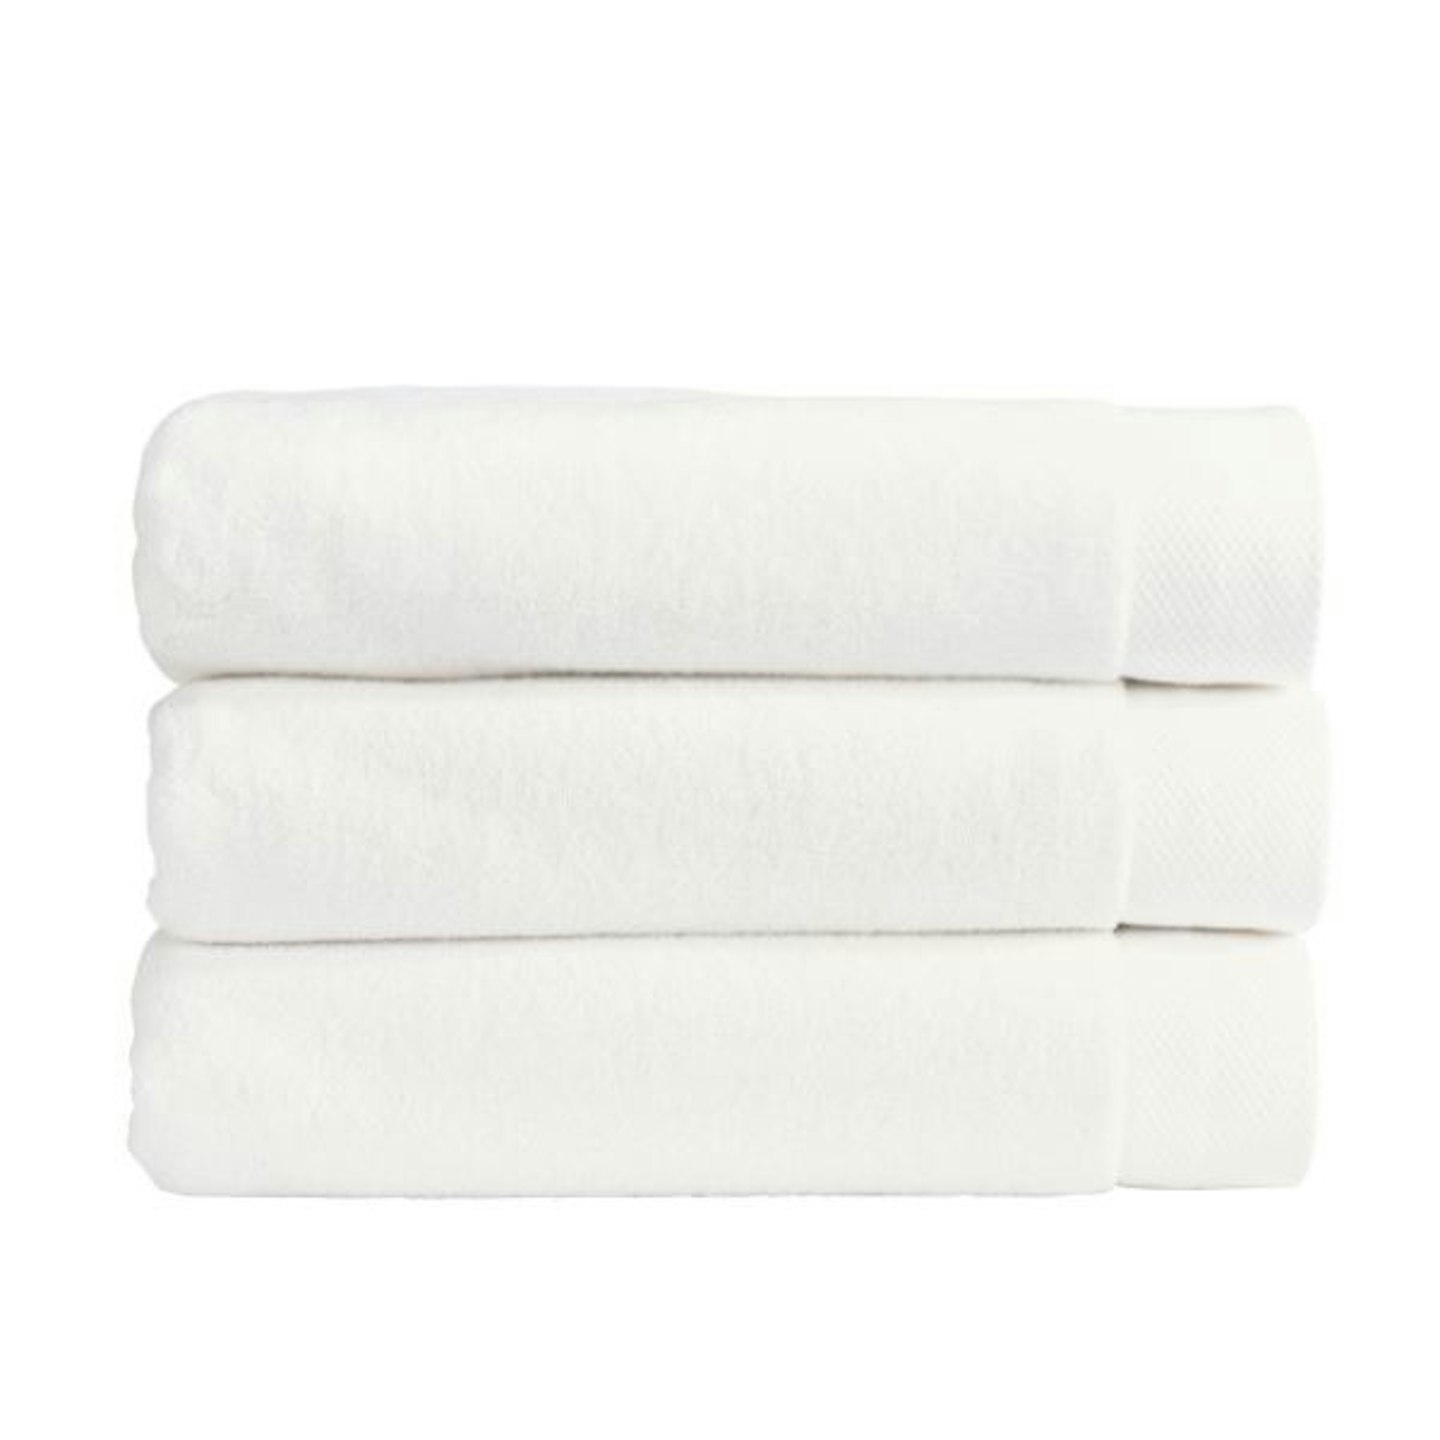 Christys white towel